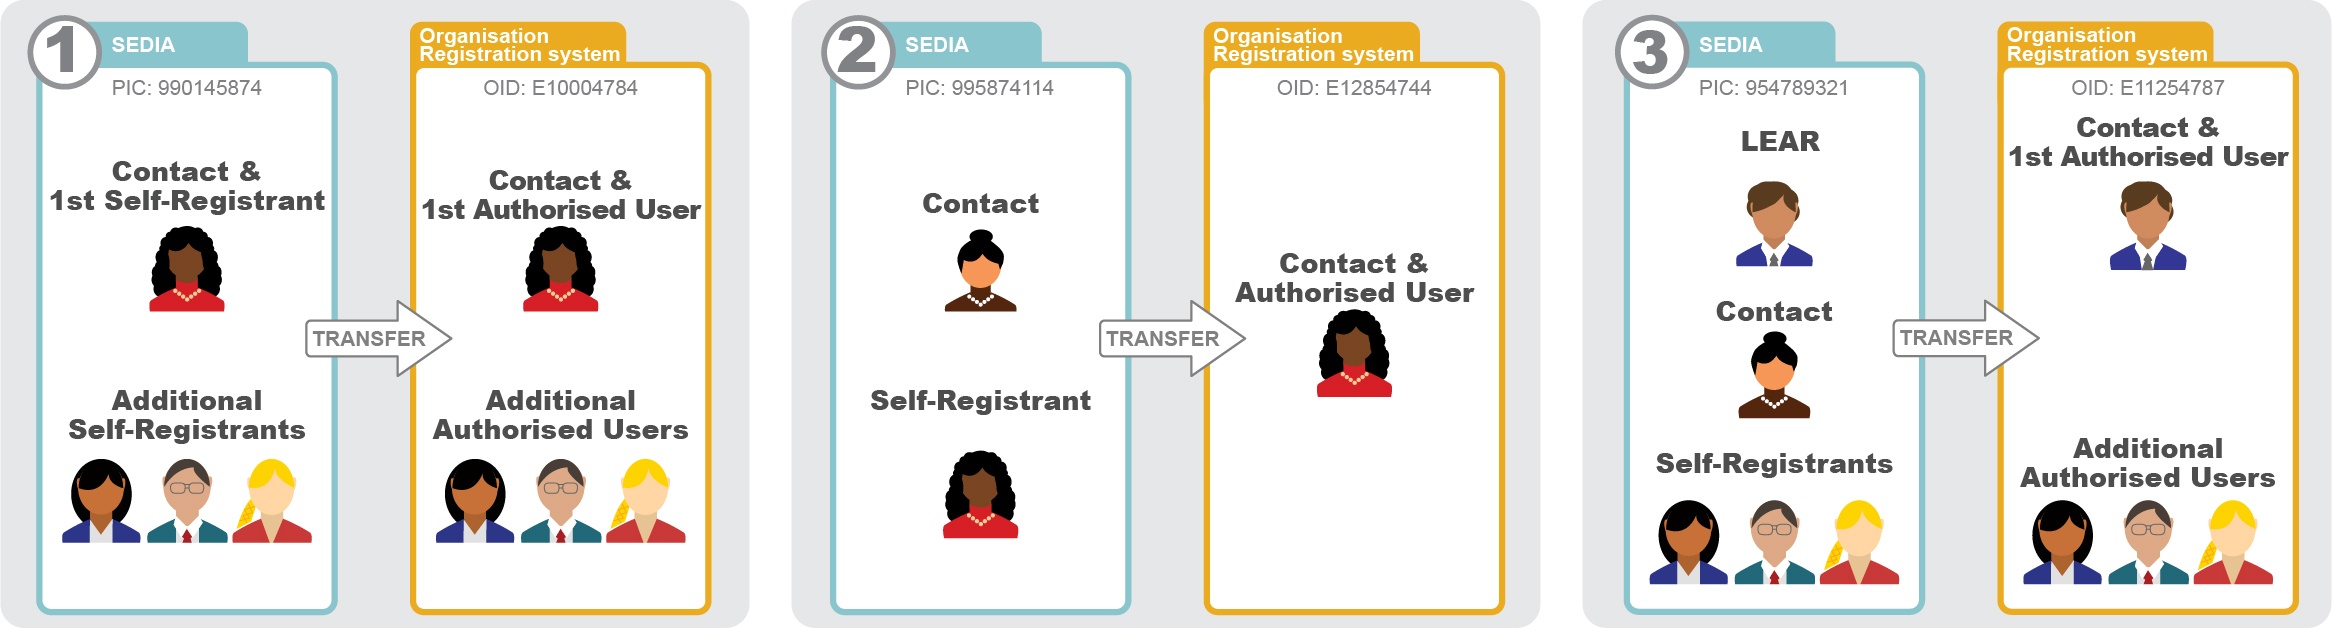 Transfer of user roles